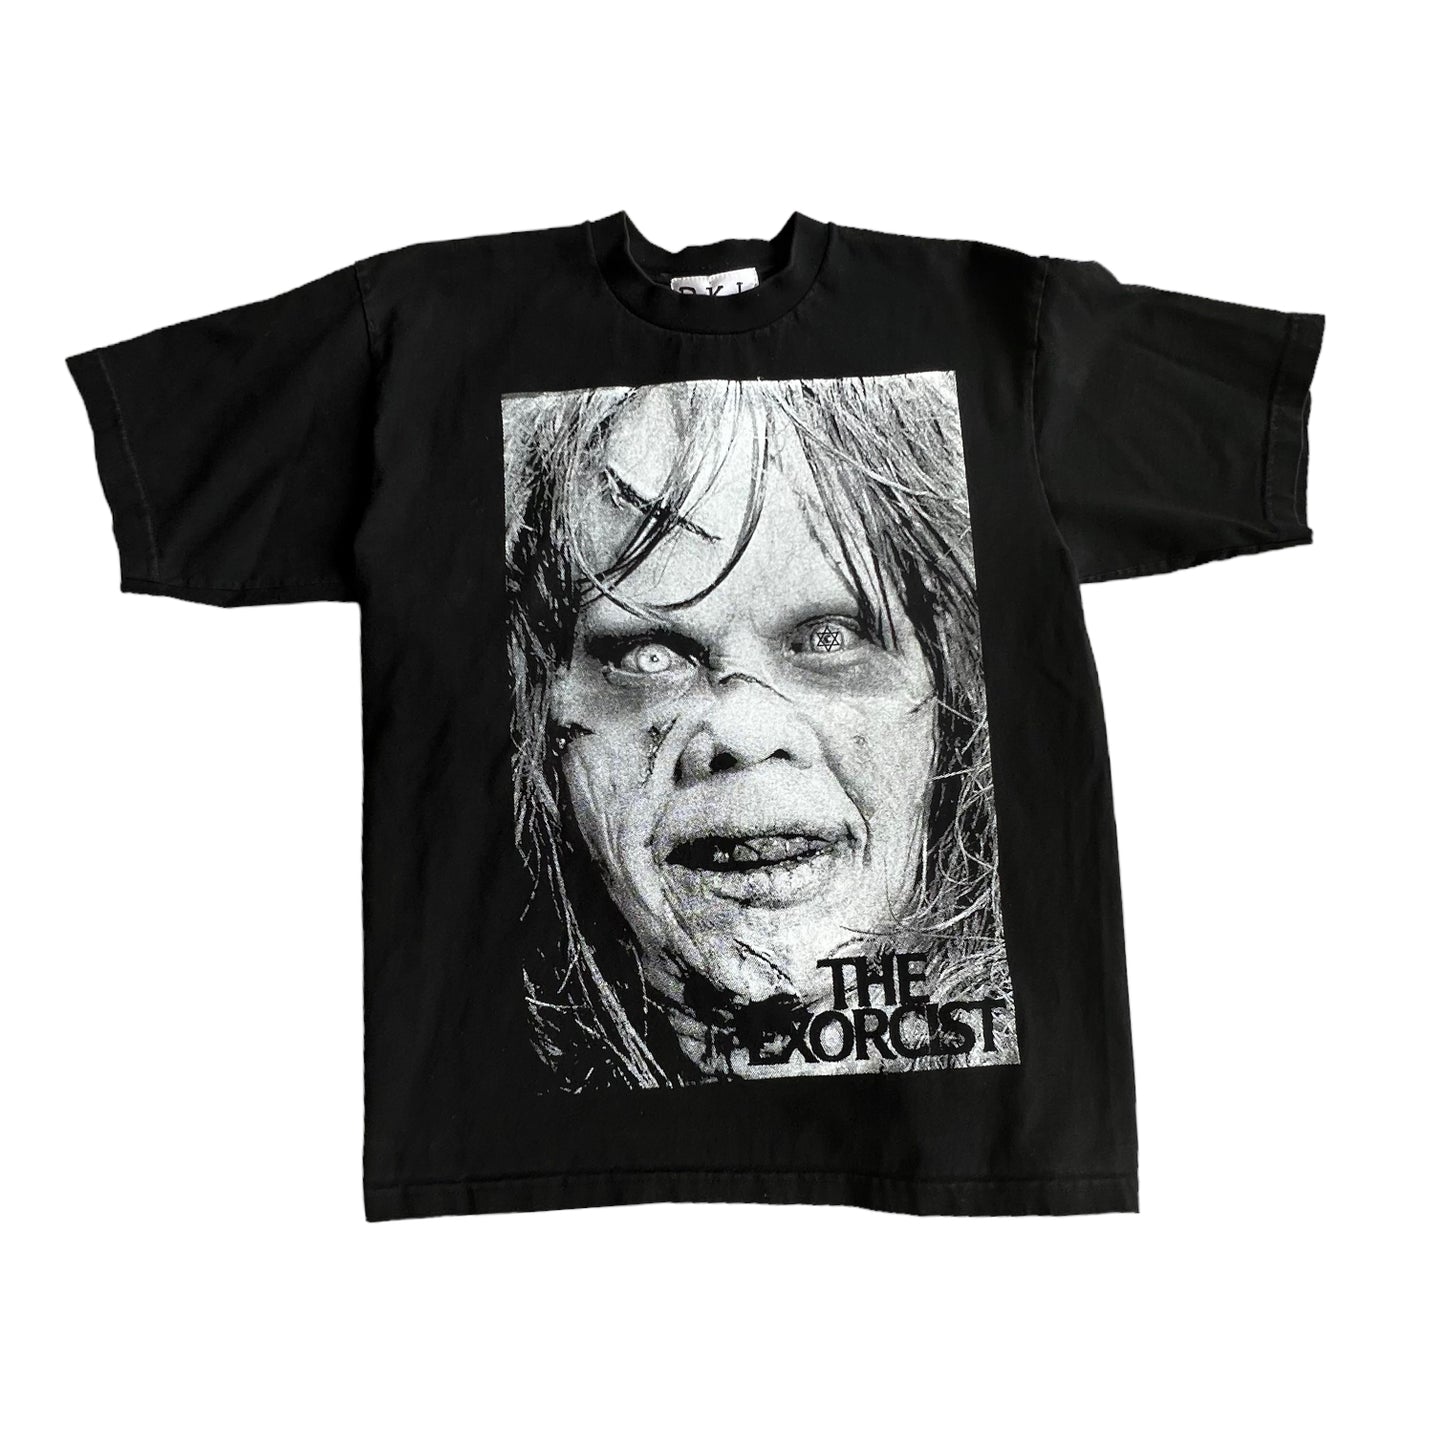 Exorcist T shirt